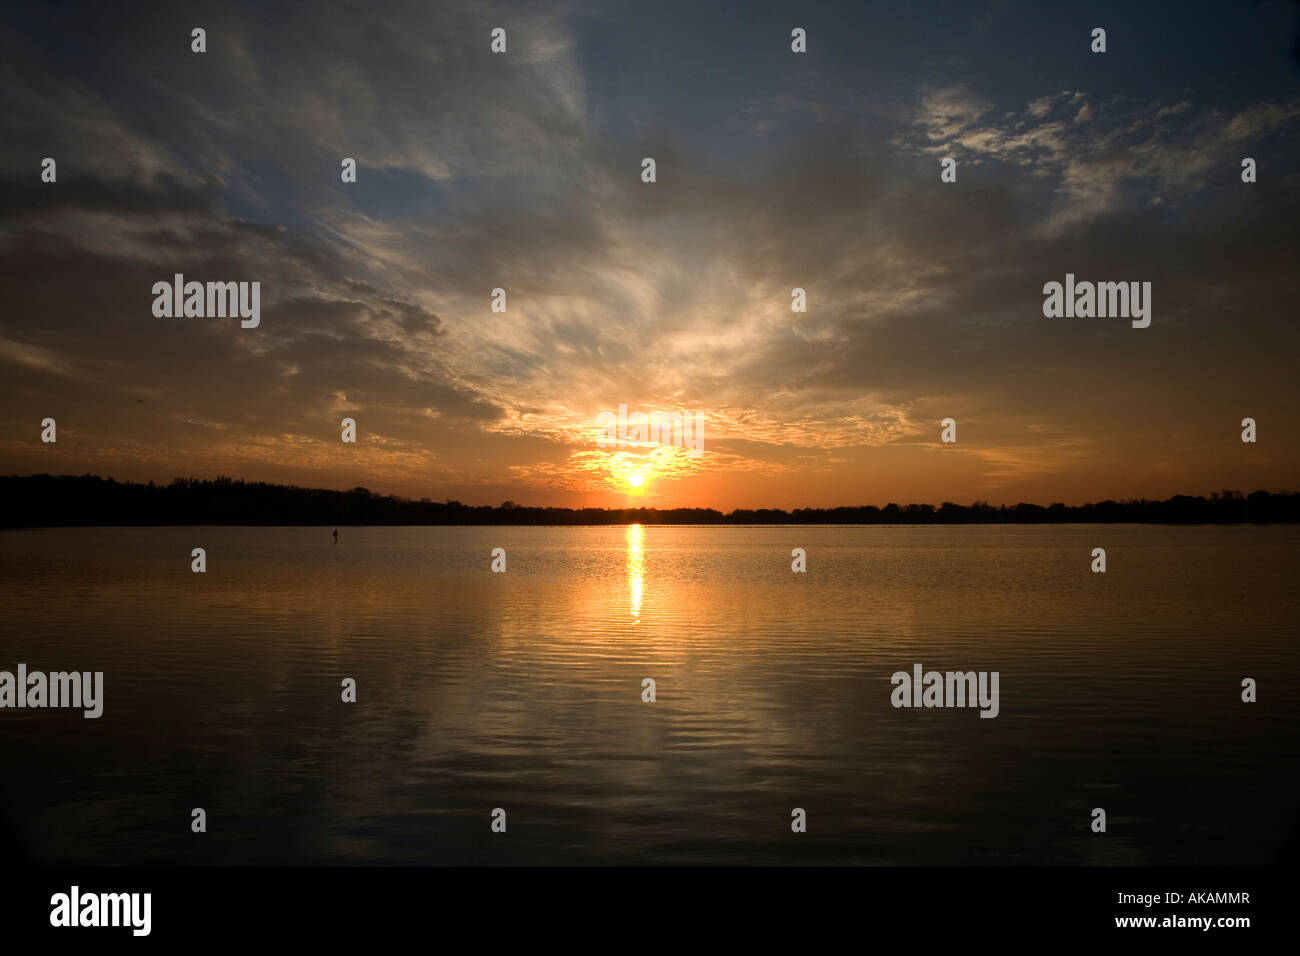 Dramatic Sunset Scene Stock Photo - Alamy